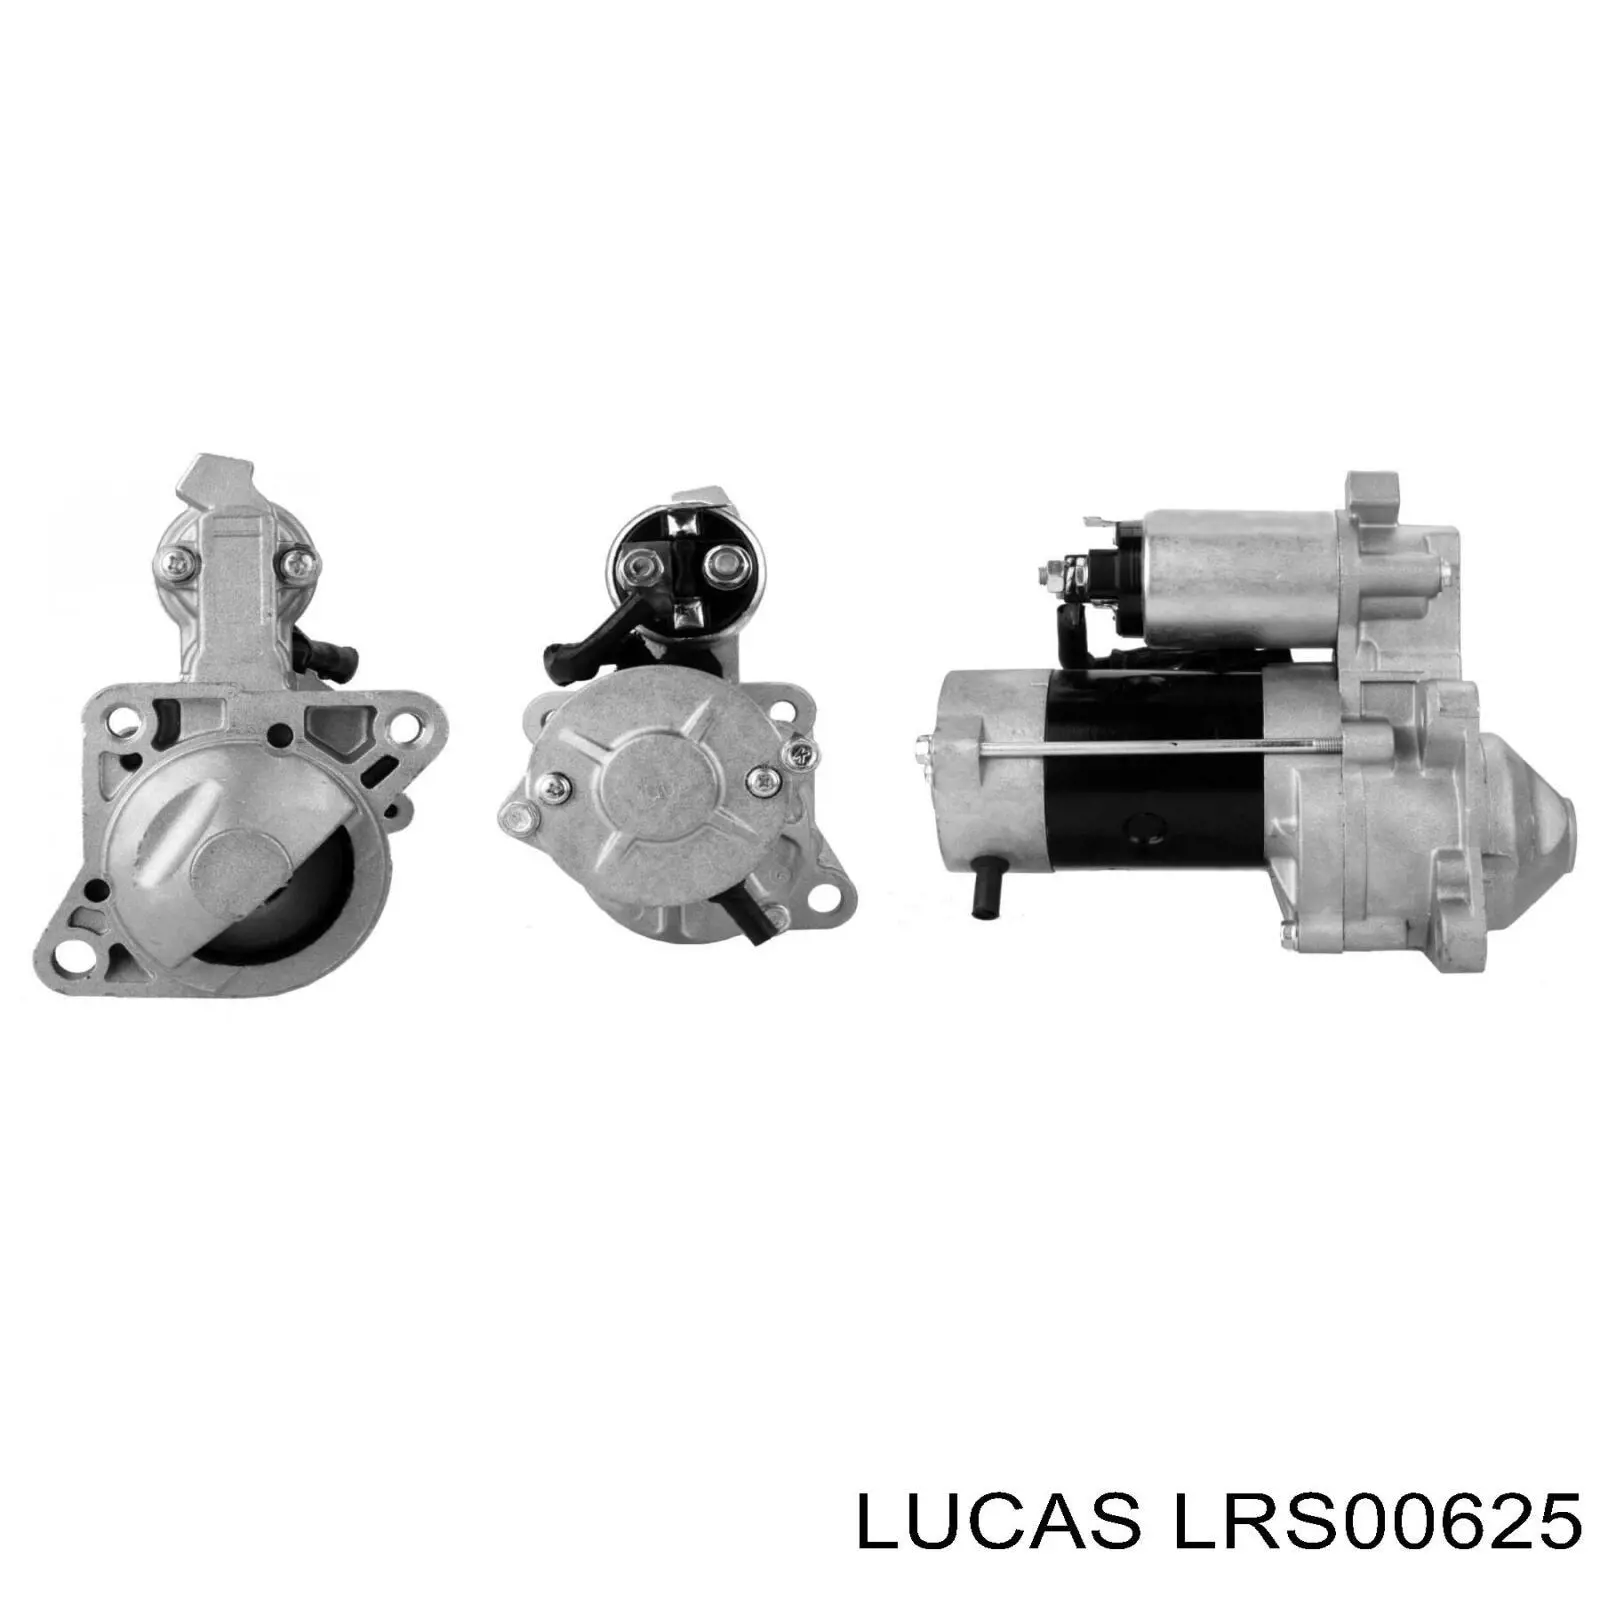 Motor de arranque LRS00625 Lucas